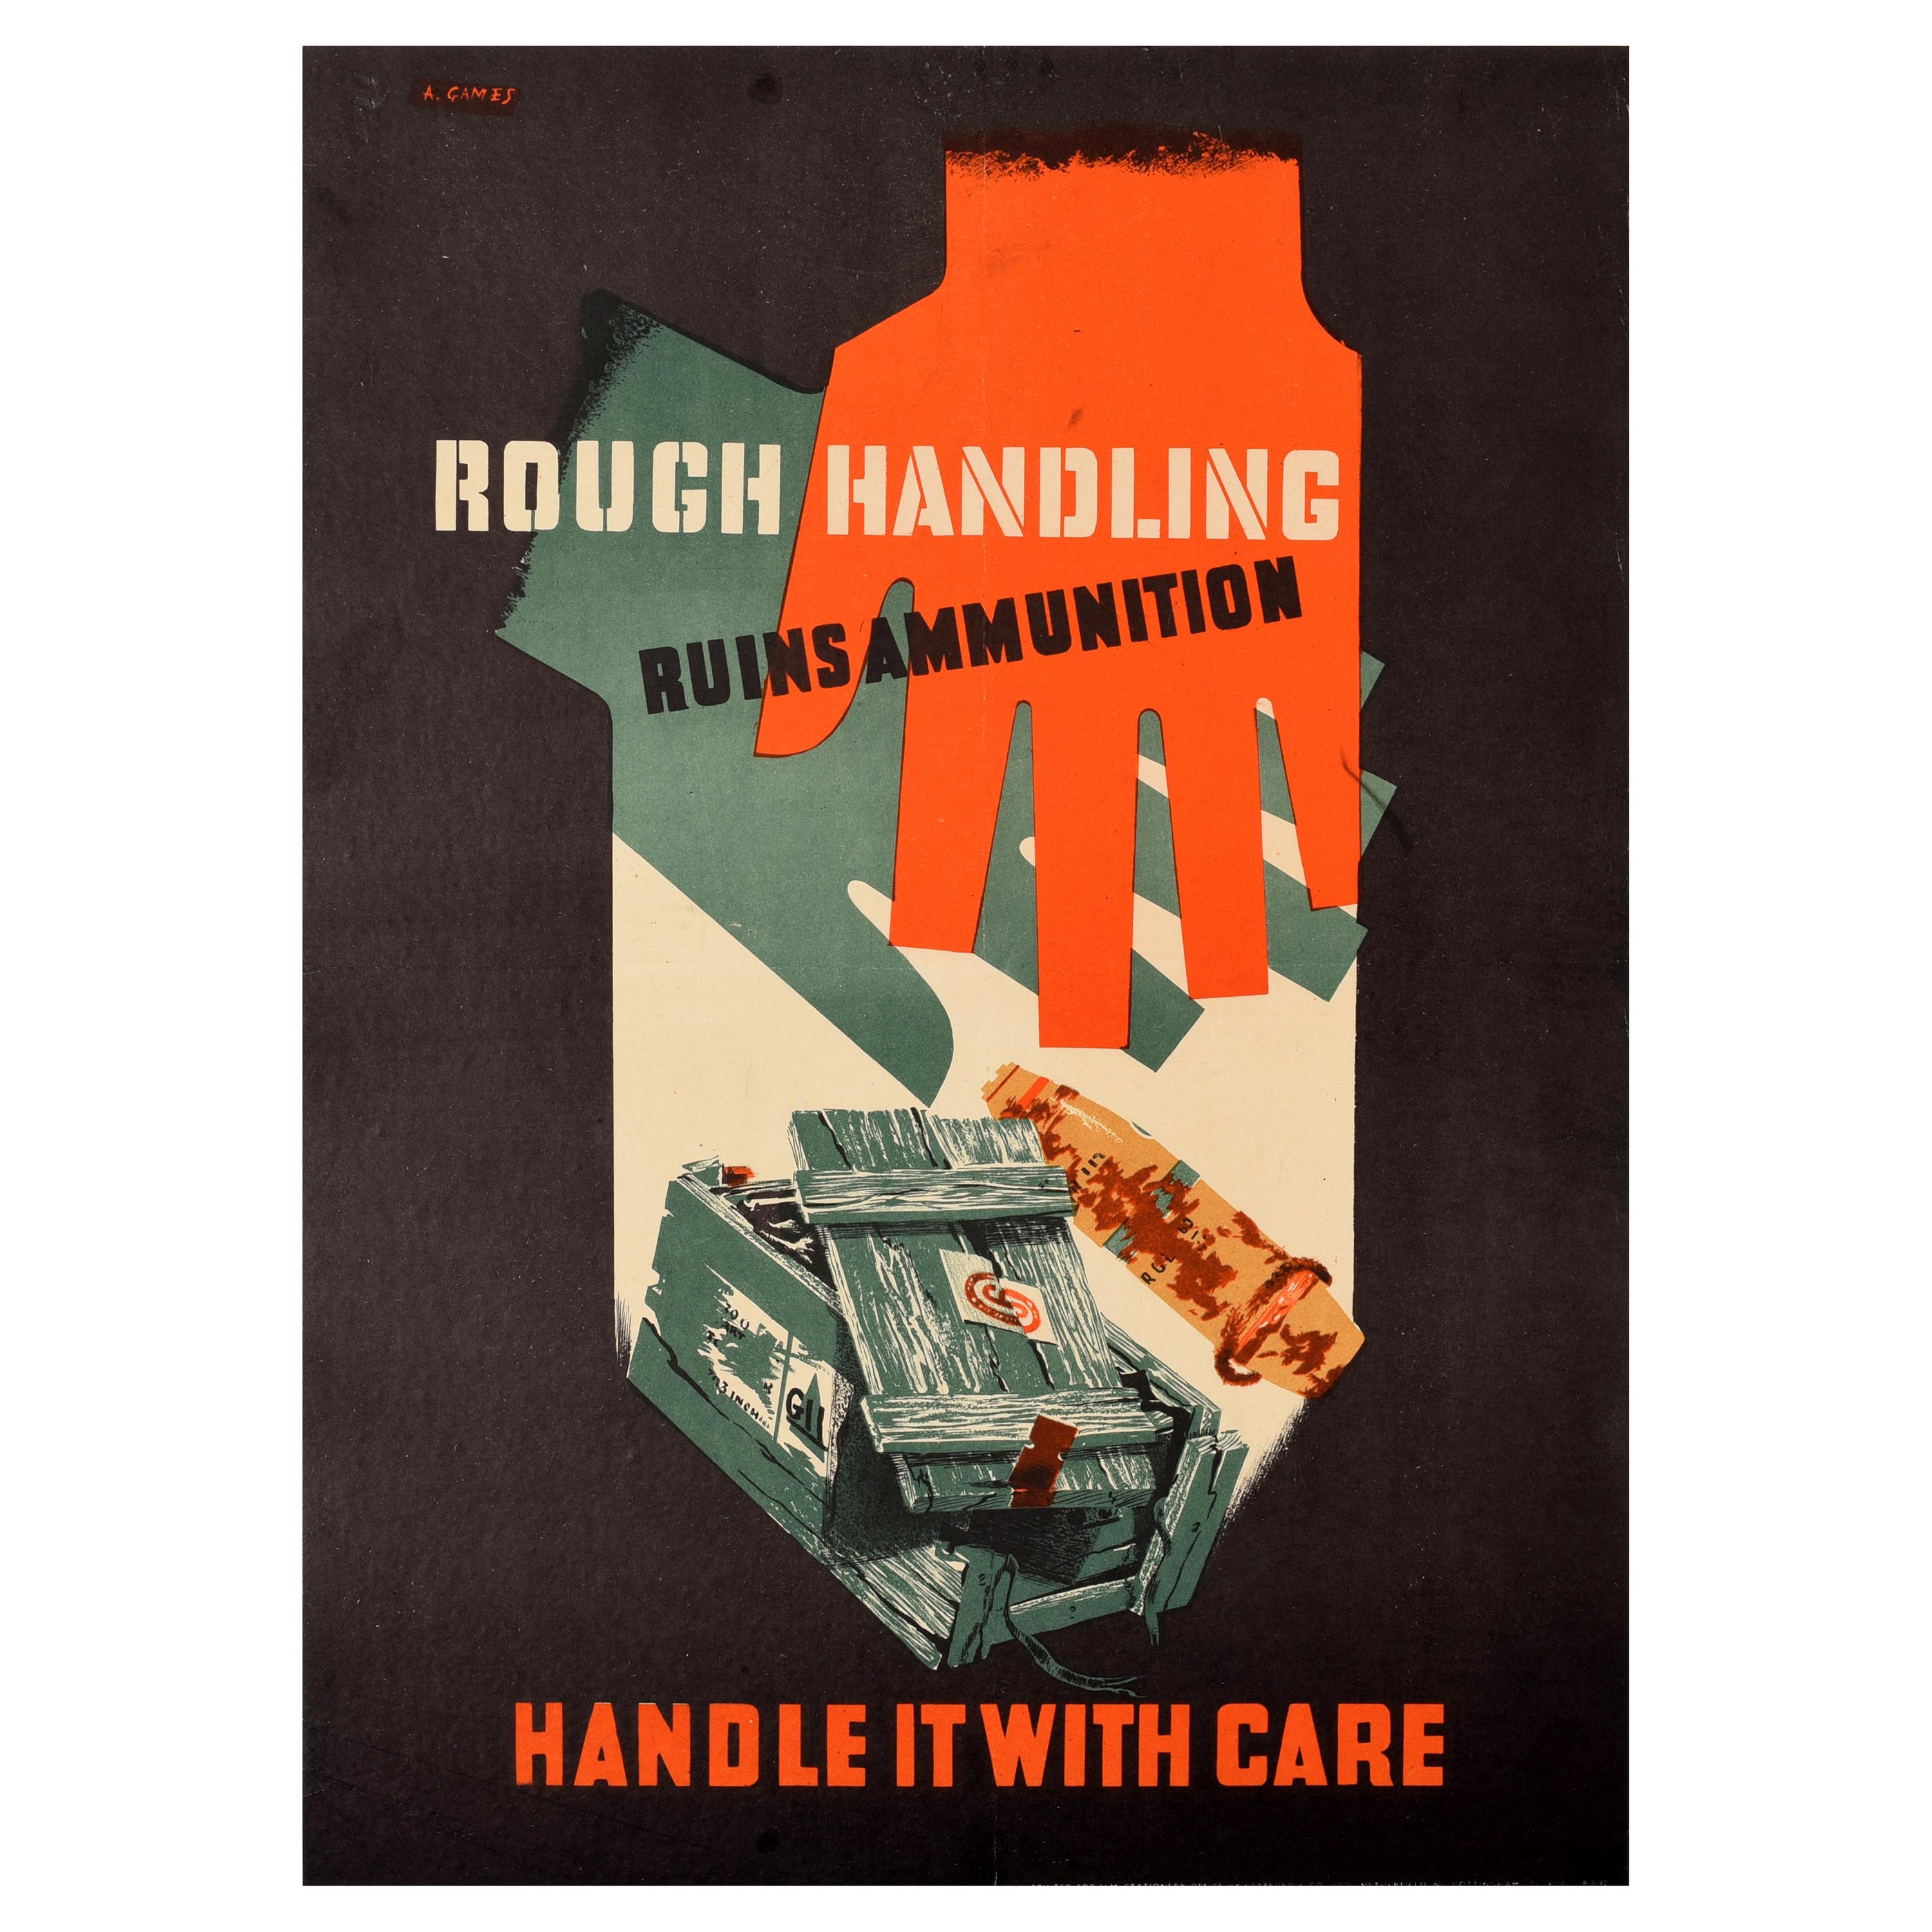 Original-Vintage-Poster, WWII, „Rough handling Ruins Ammunition Safety Care Warning“, Warnung